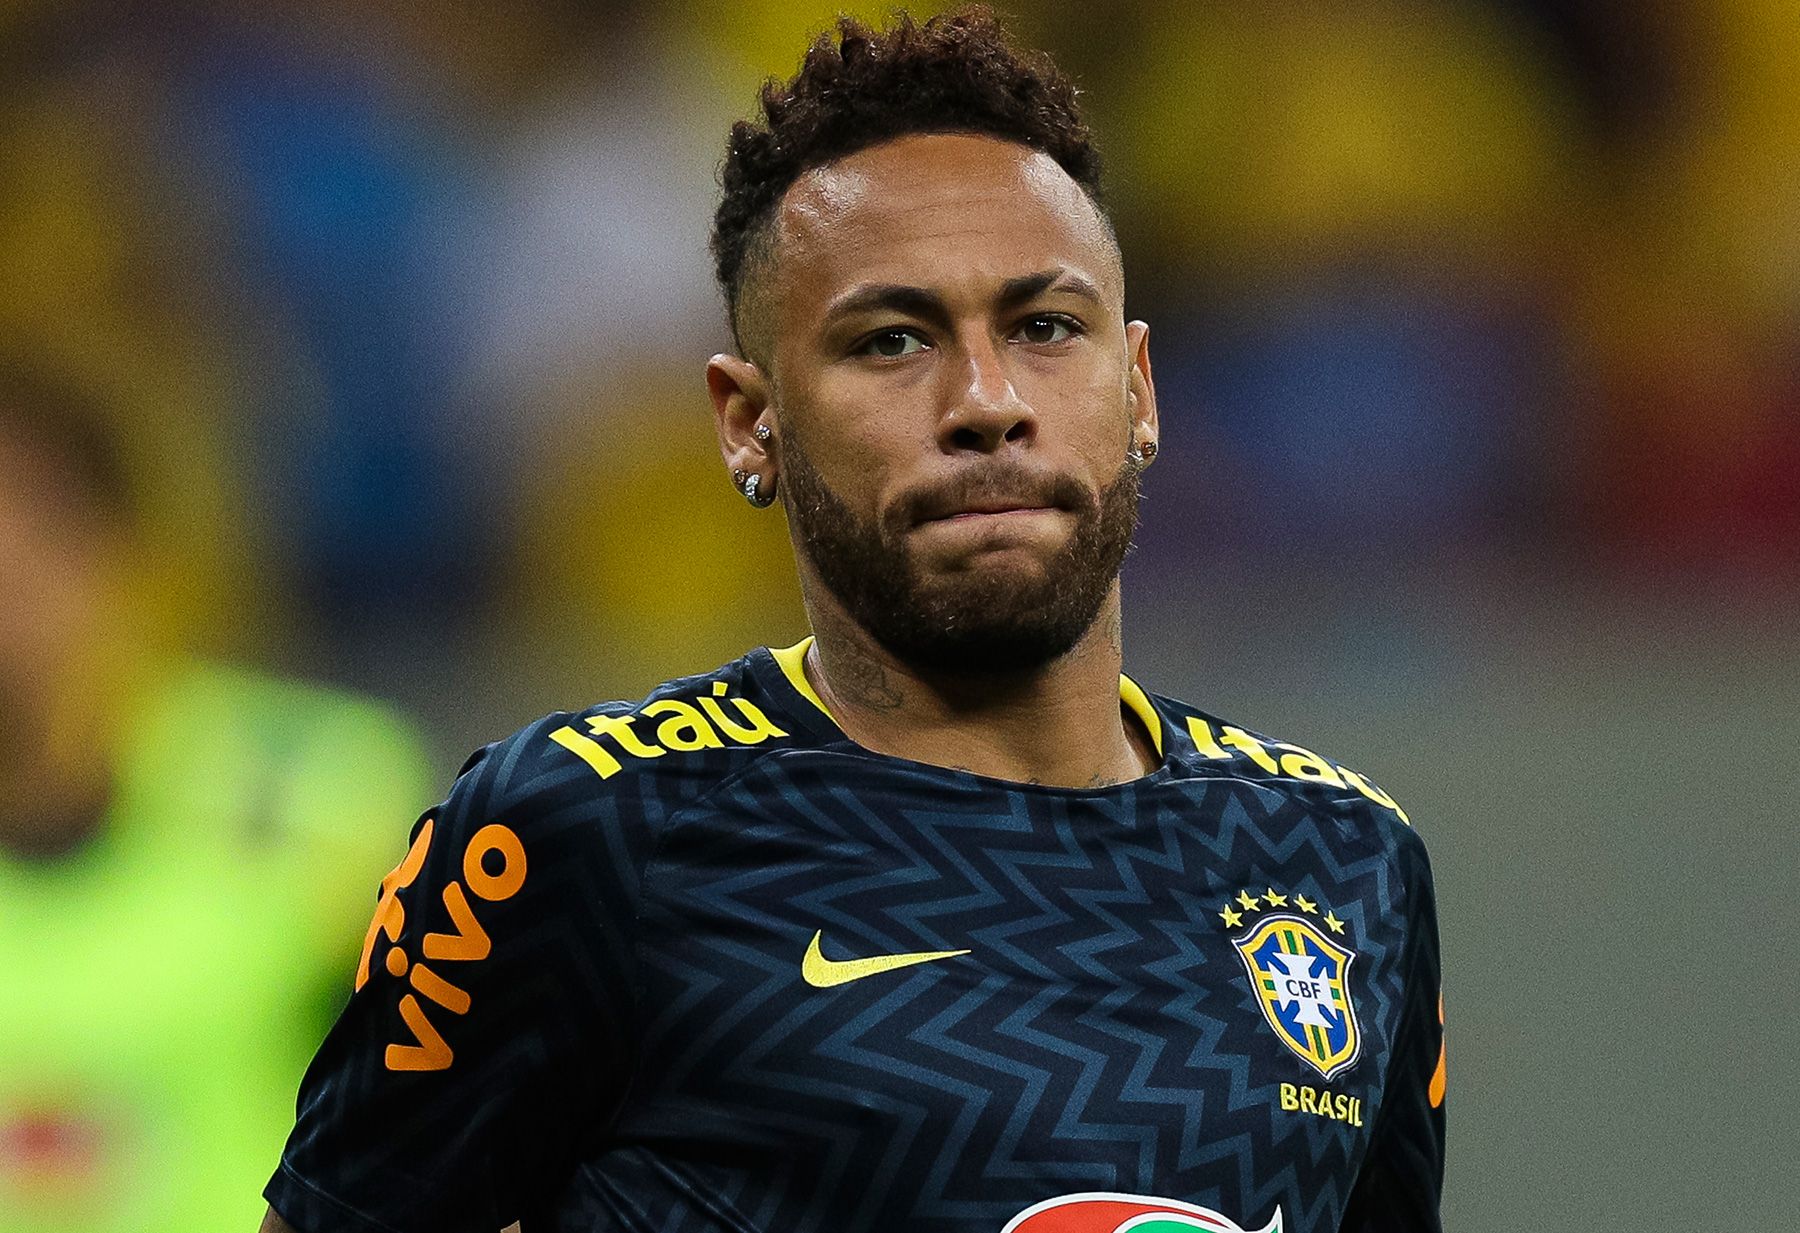 Neymar en un partido con Brasil